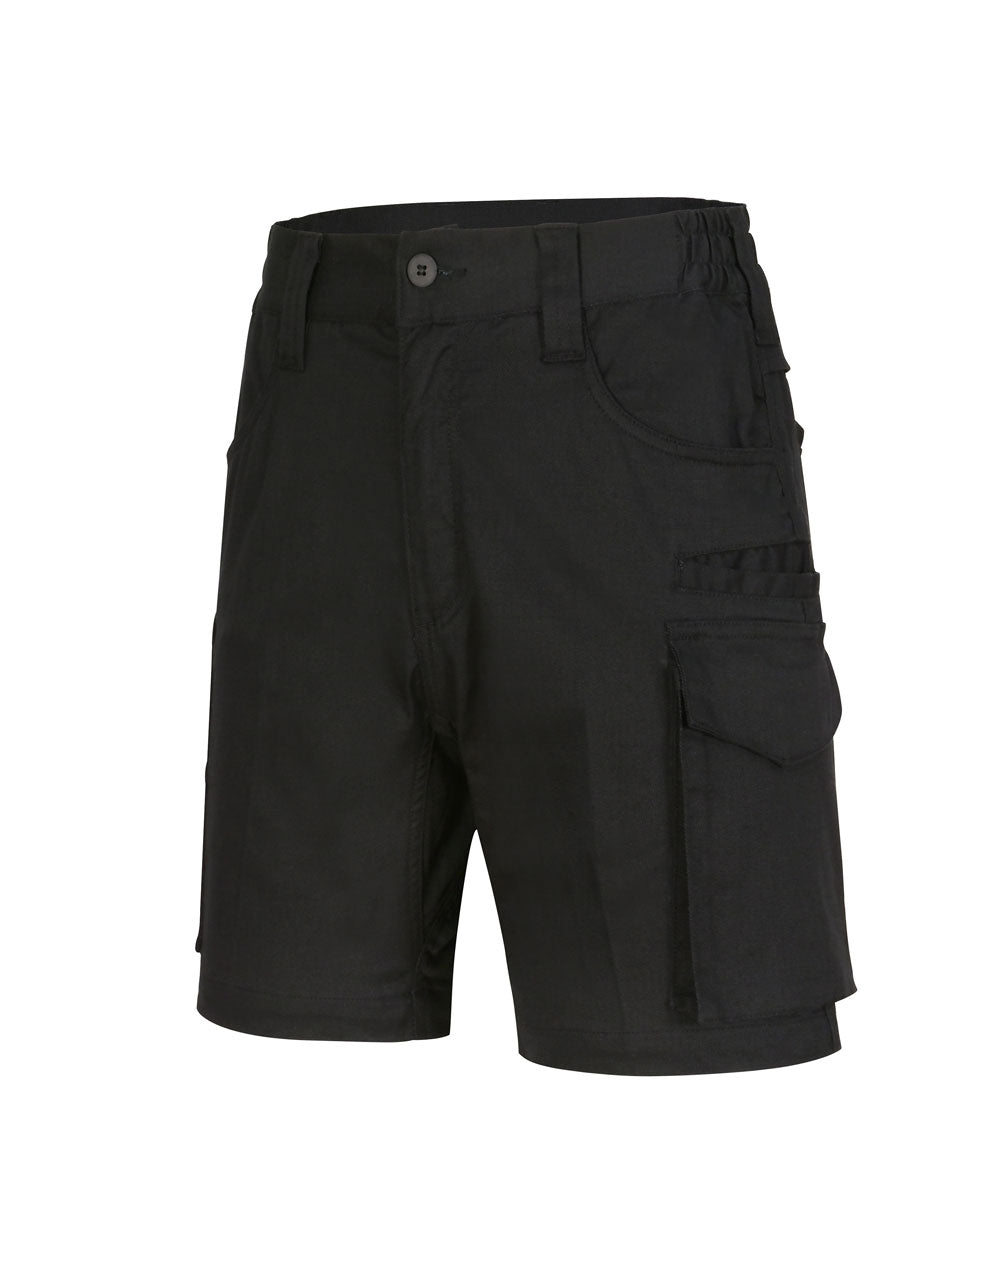 Unisex Cotton Stretch Rip Stop Work Shorts WP27 Work Wear Australian Industrial Wear 72R Black 